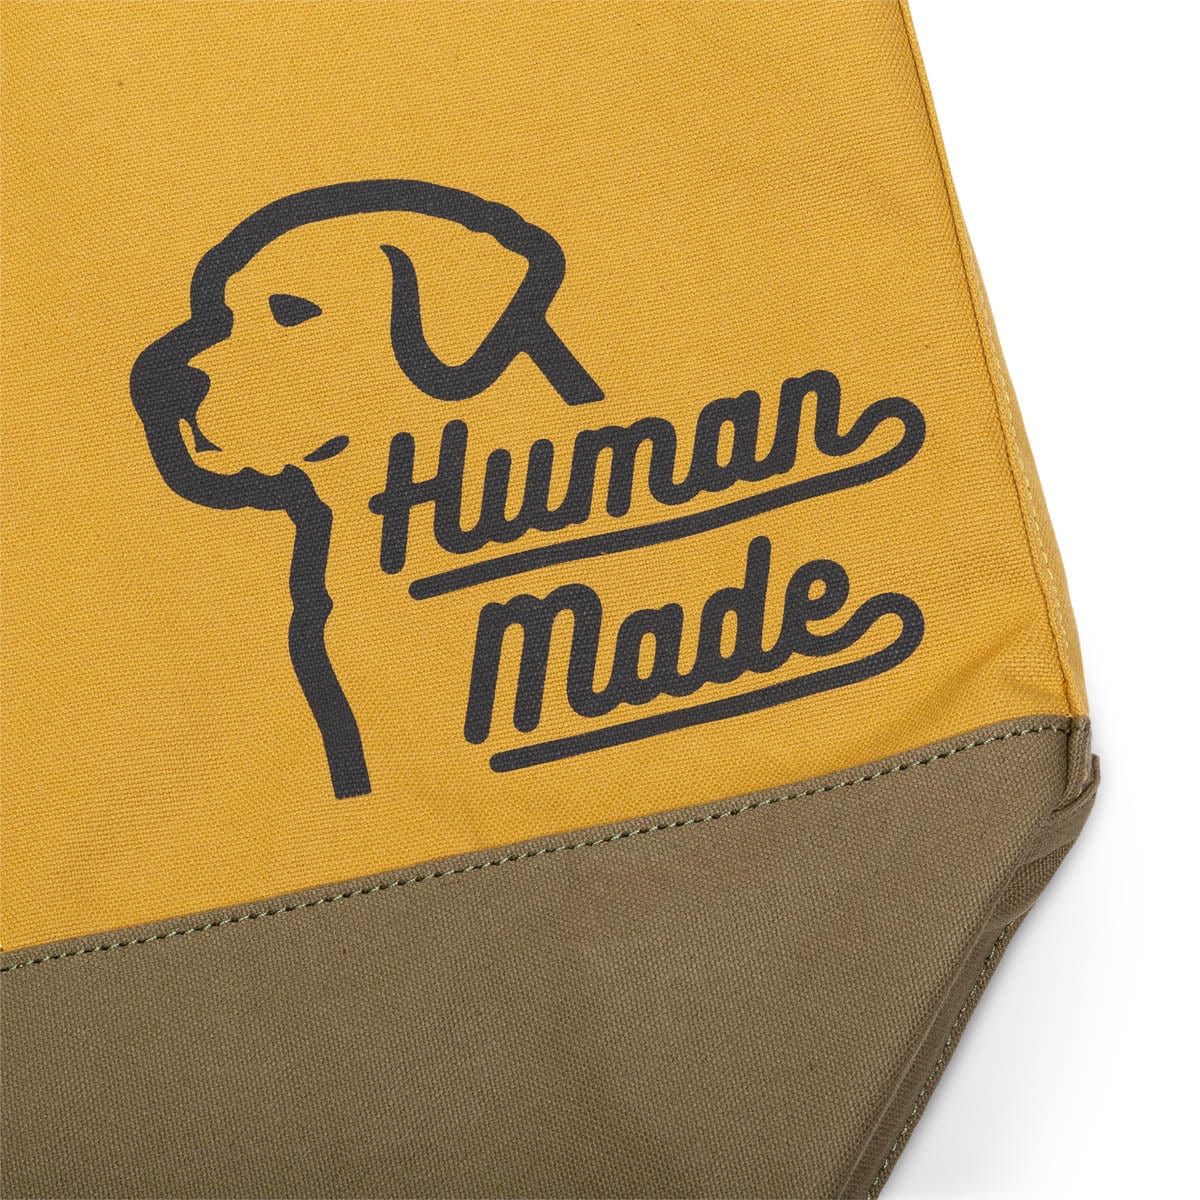 Human Made Bags YELLOW / O/S TOTE BAG LARGE